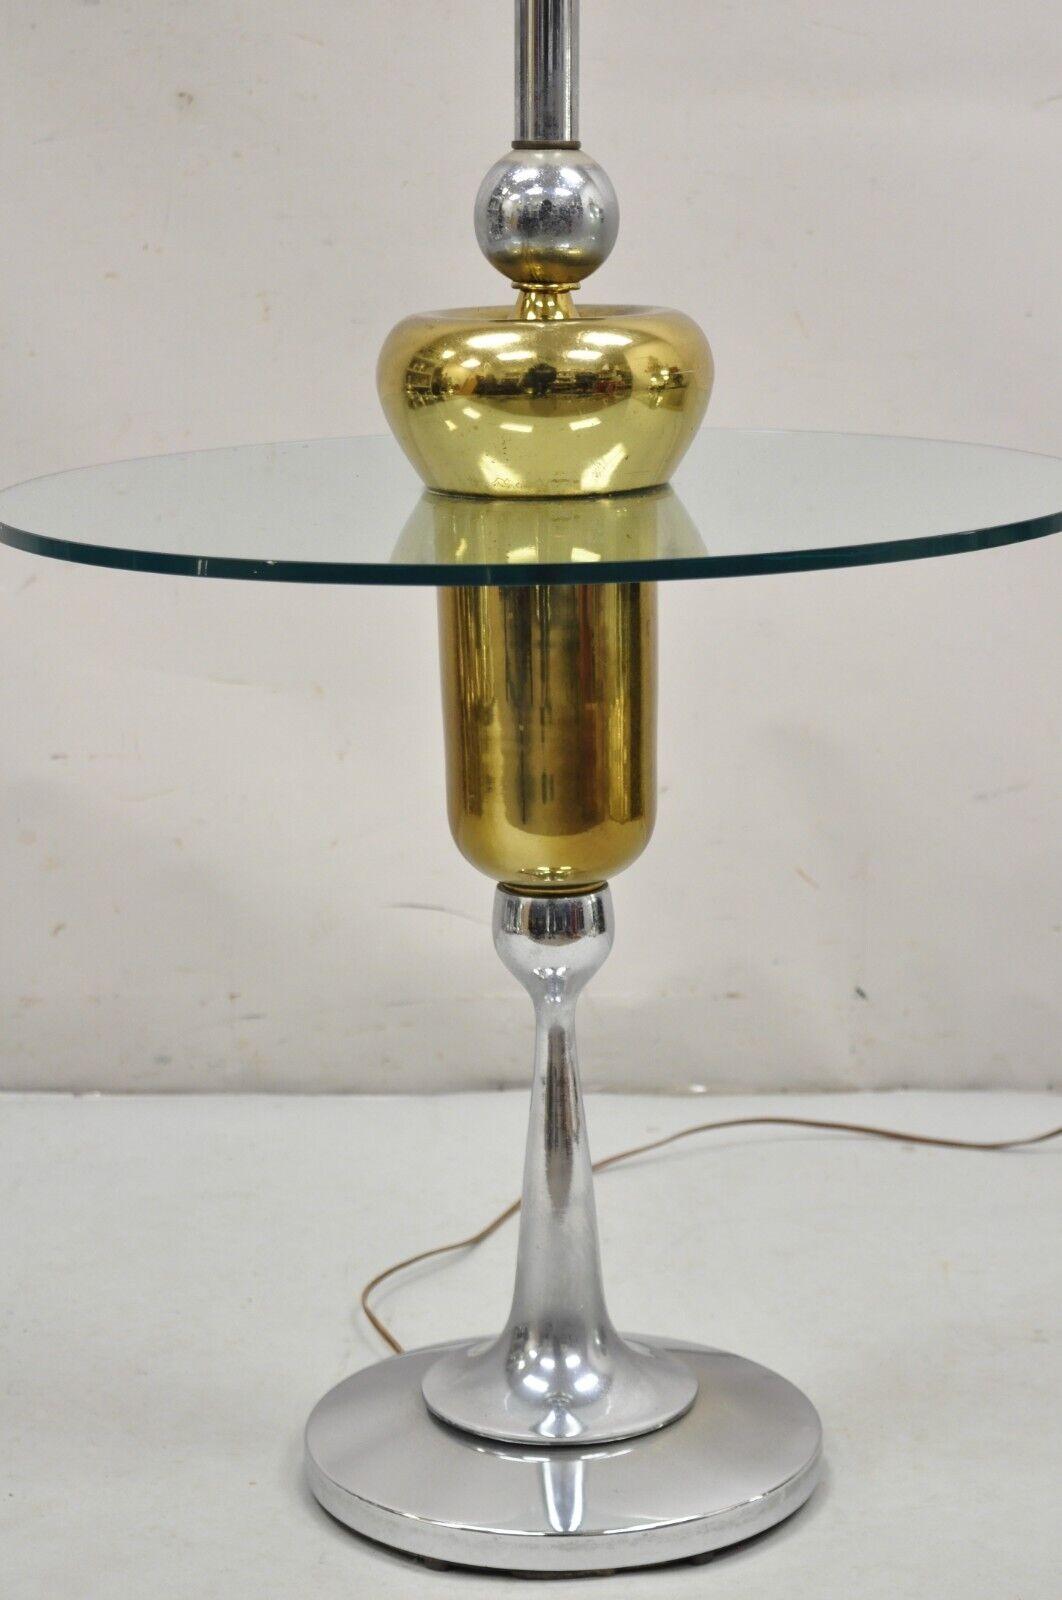 Vintage Mid Century Modern Space Age Atomic Era Chrome Brass & Glass Side Table / Floor Lamp. Vers 1970.
Mesures : 
Ensemble : 57